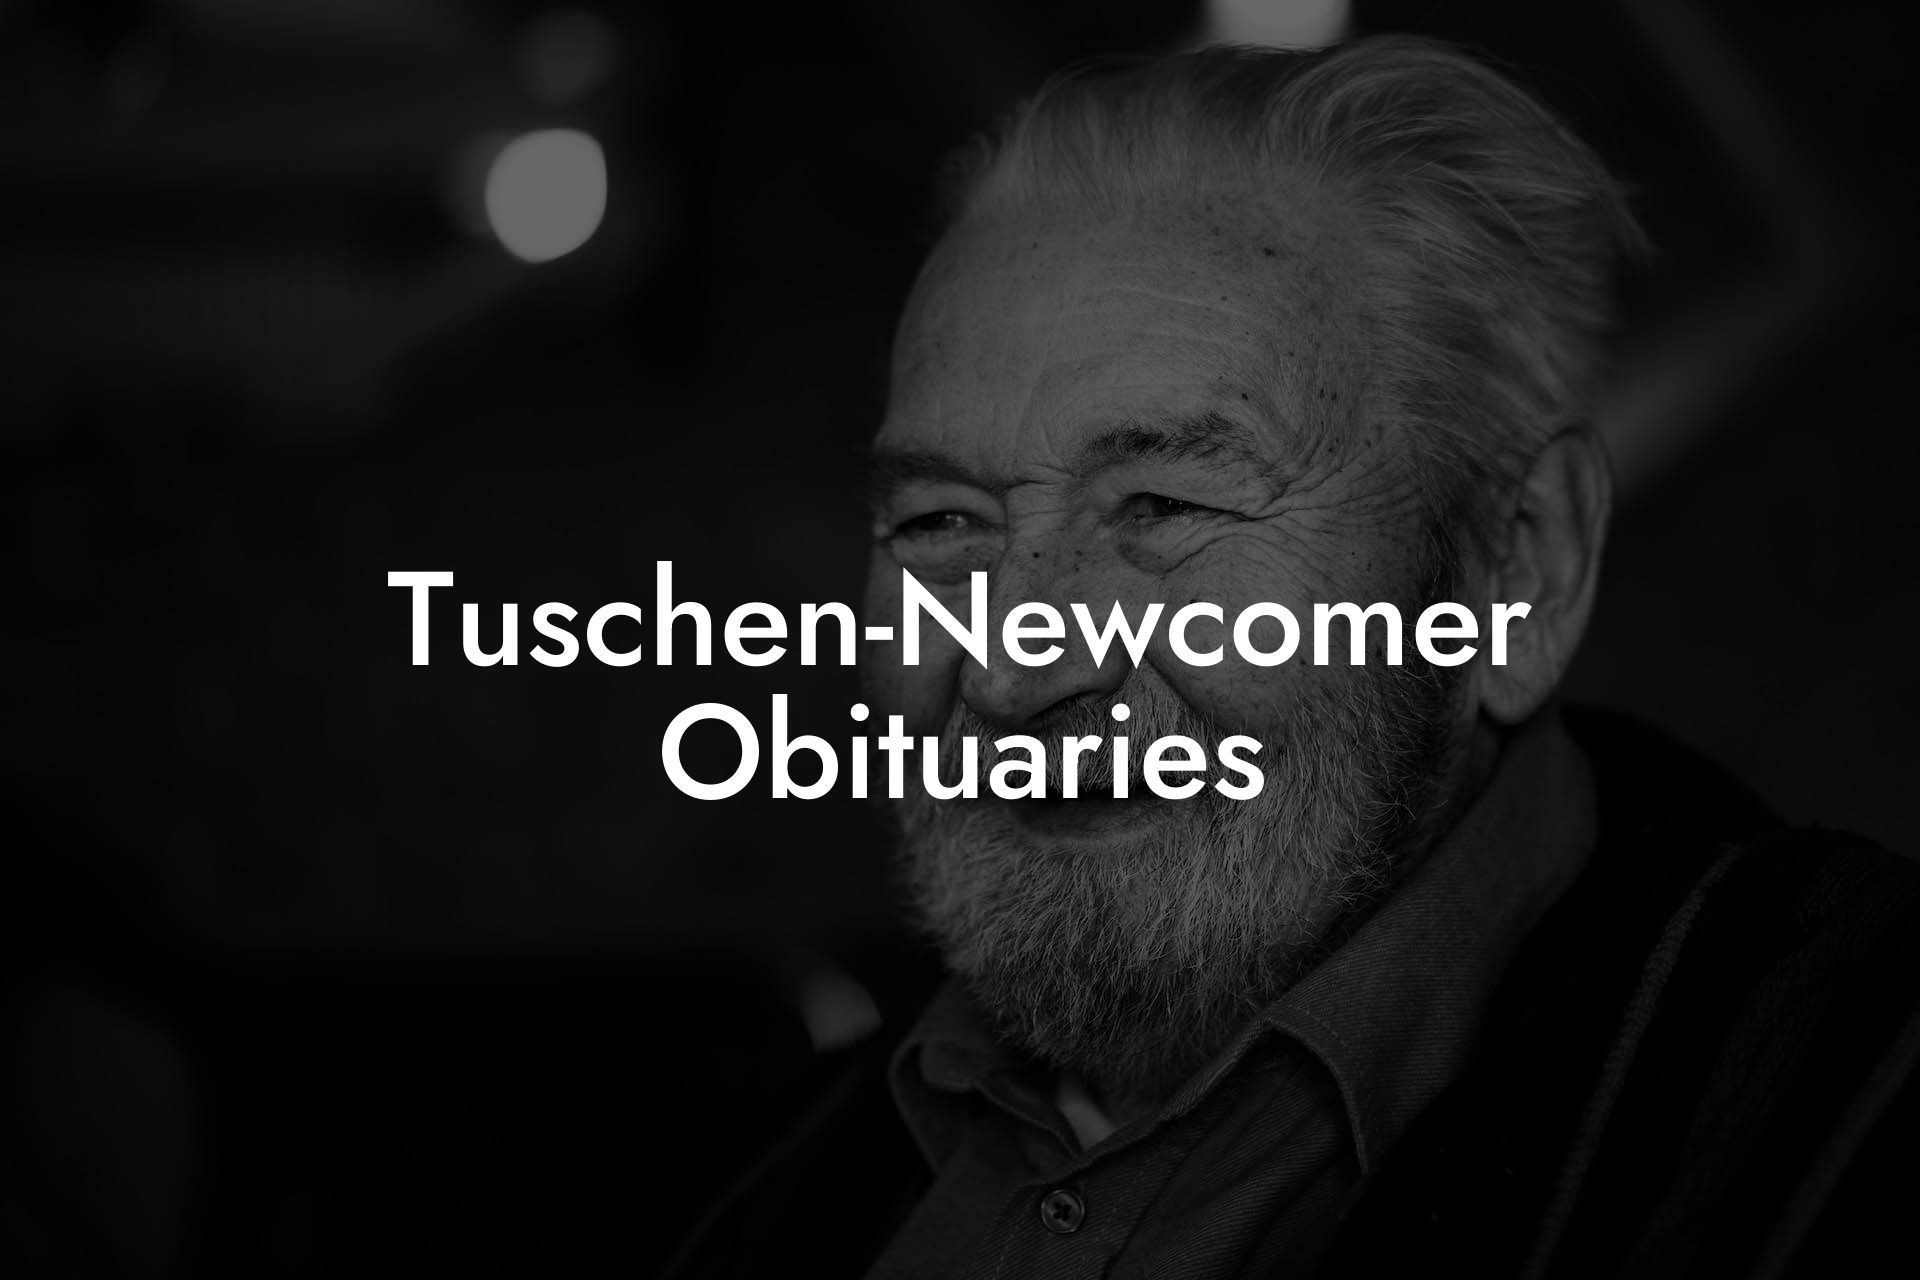 Tuschen-Newcomer Obituaries